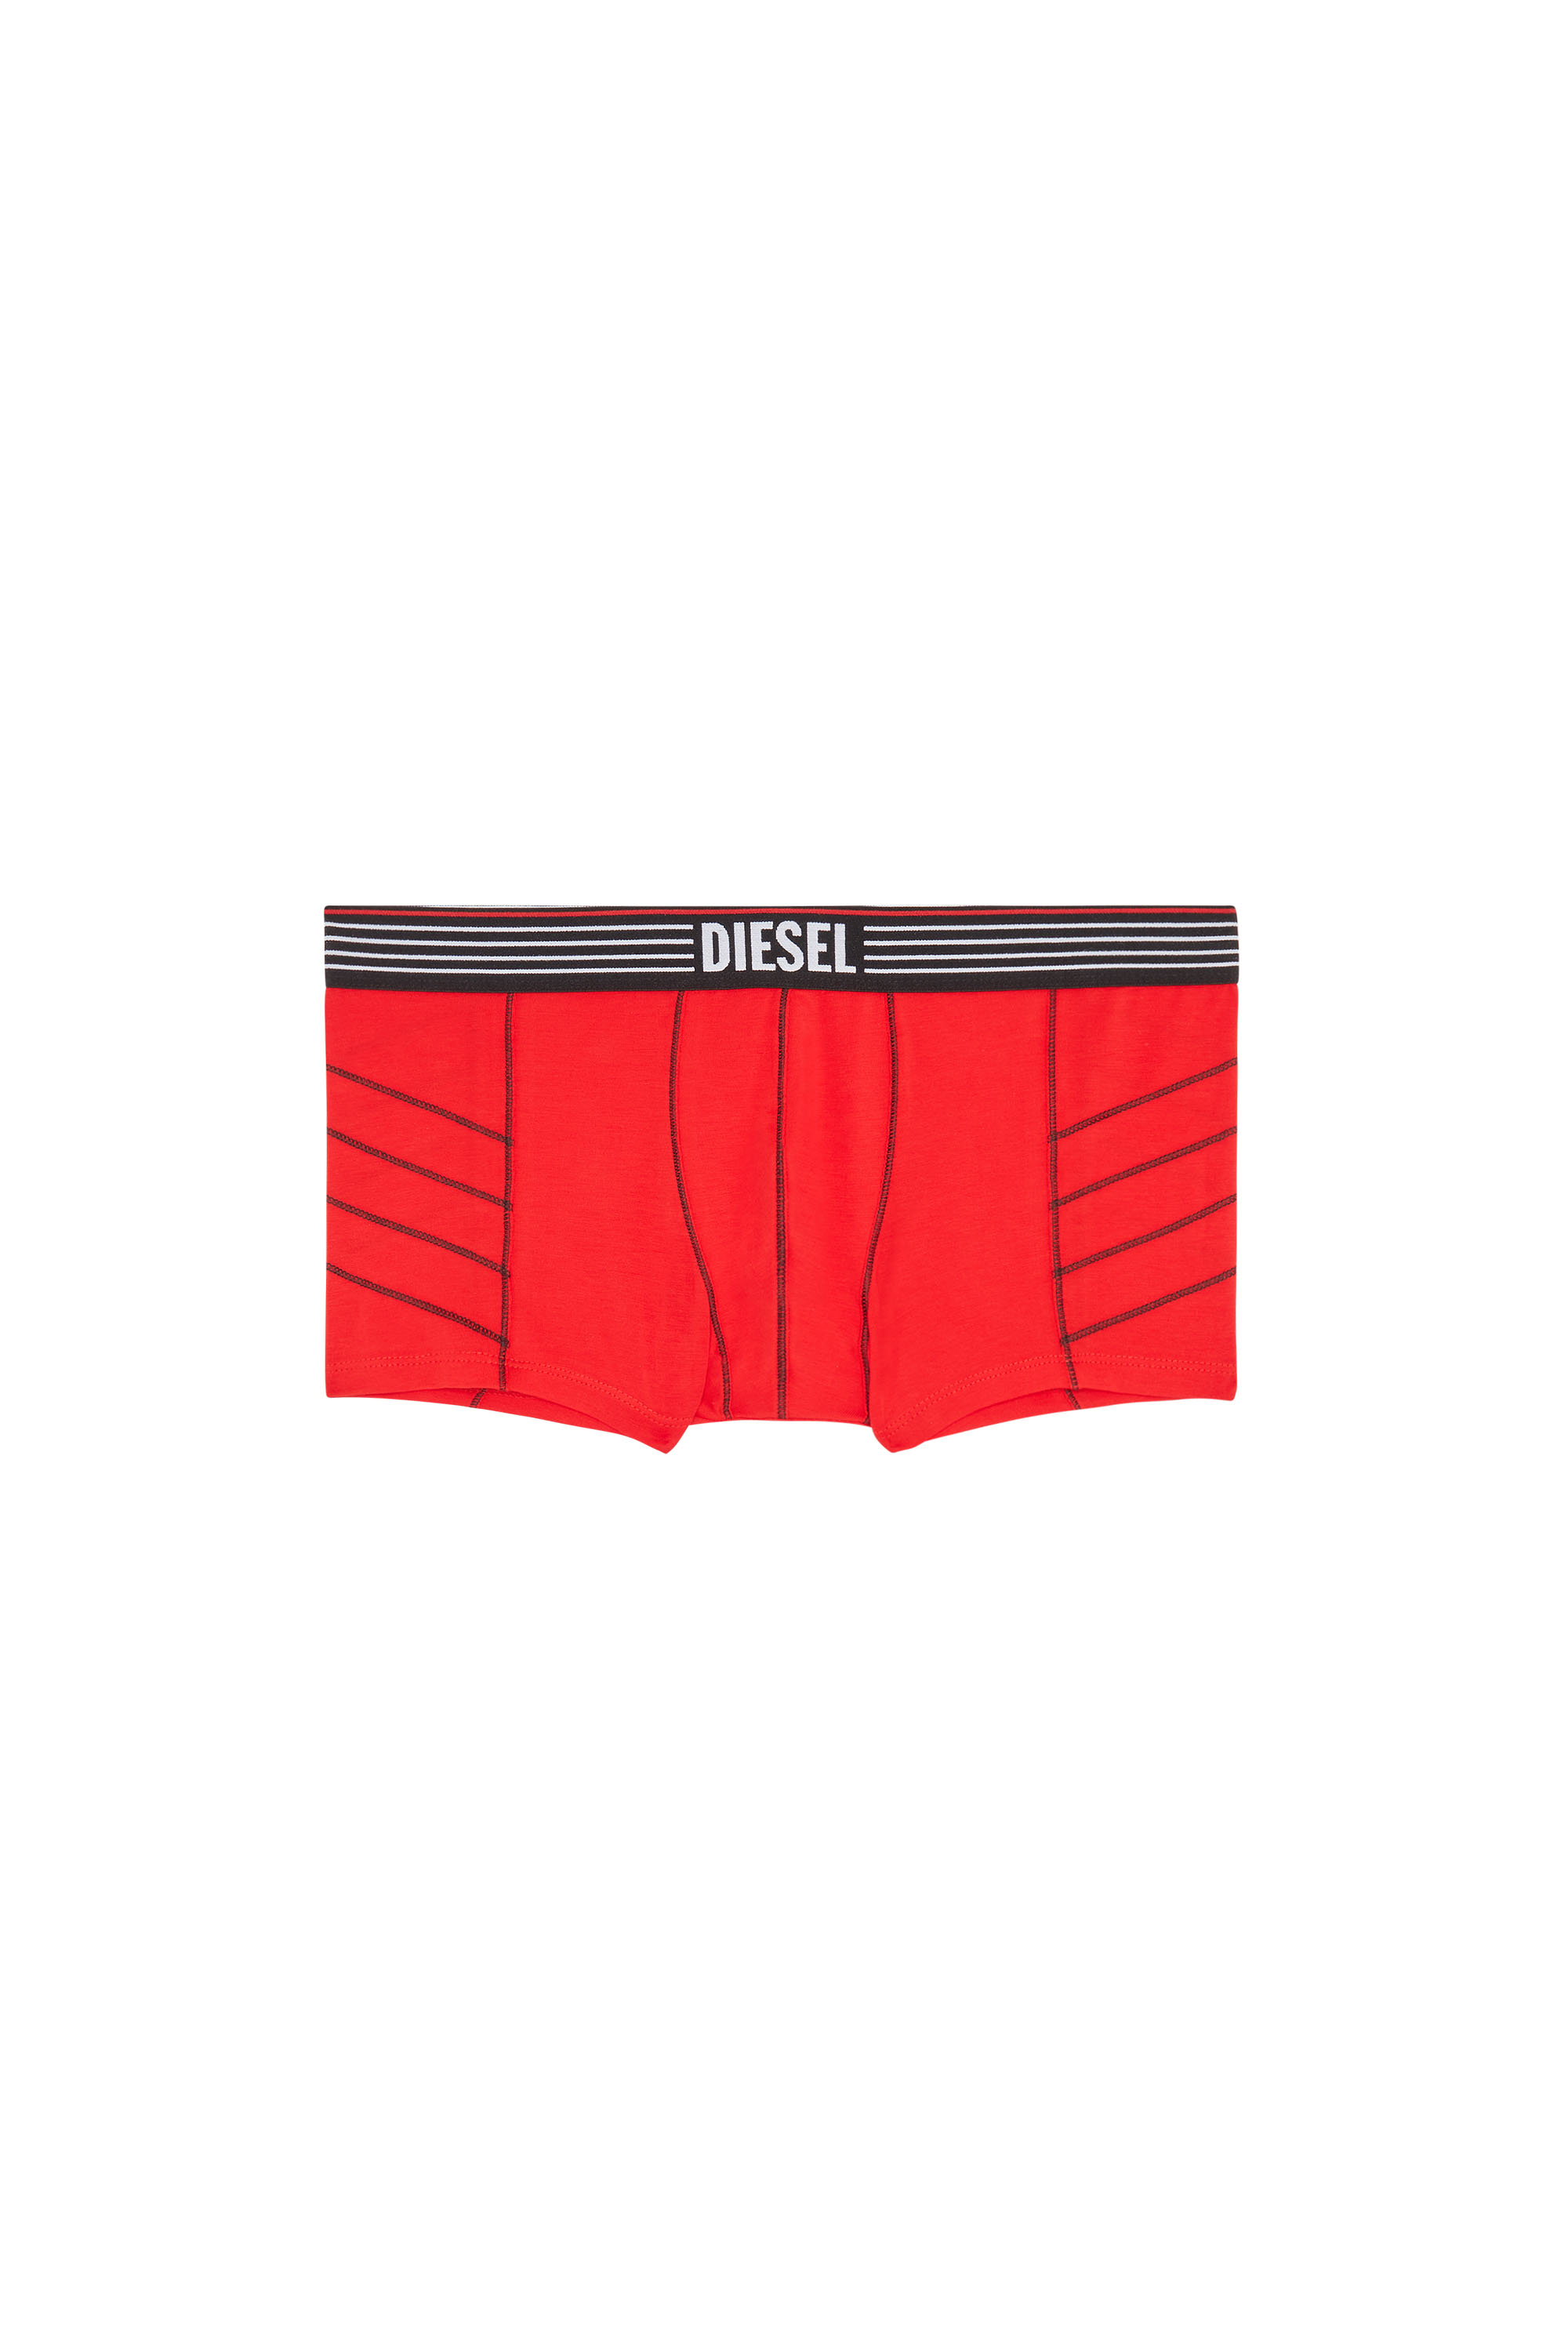 Diesel - Boxer lungo con impunture a contrasto - Boxer - Uomo - Rosso